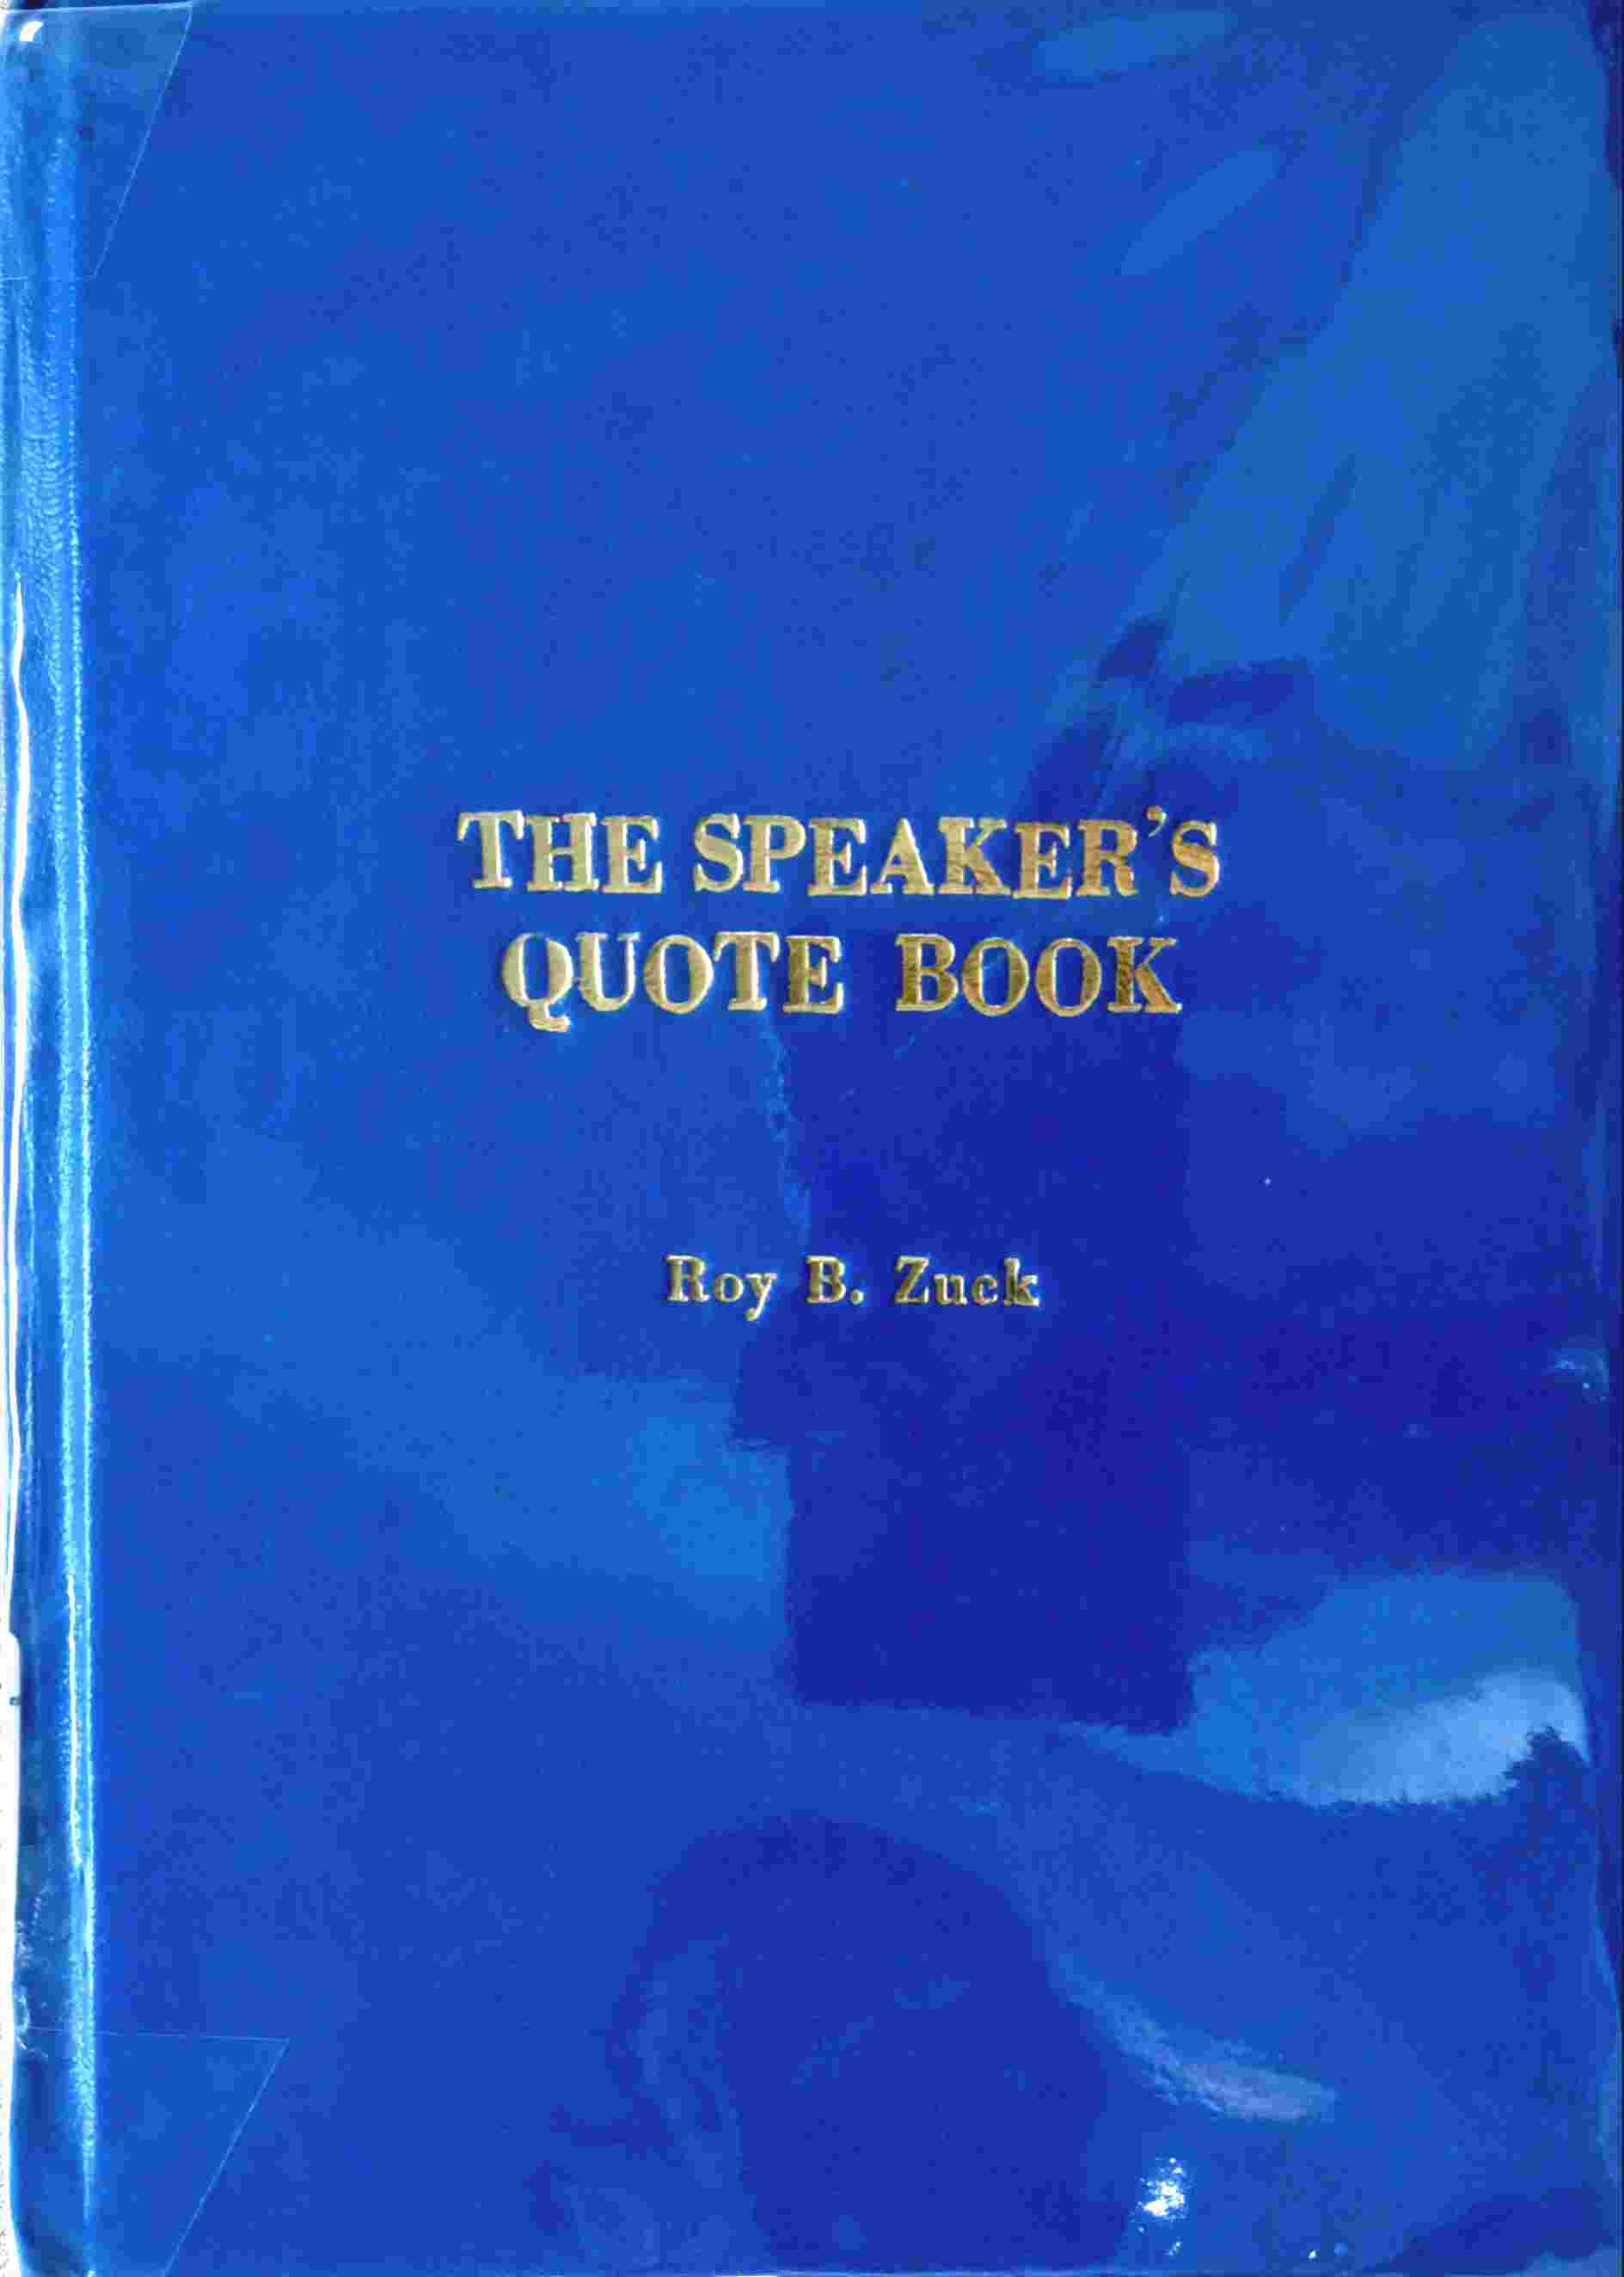 THE SPEAKER'S QUOTE BOOK